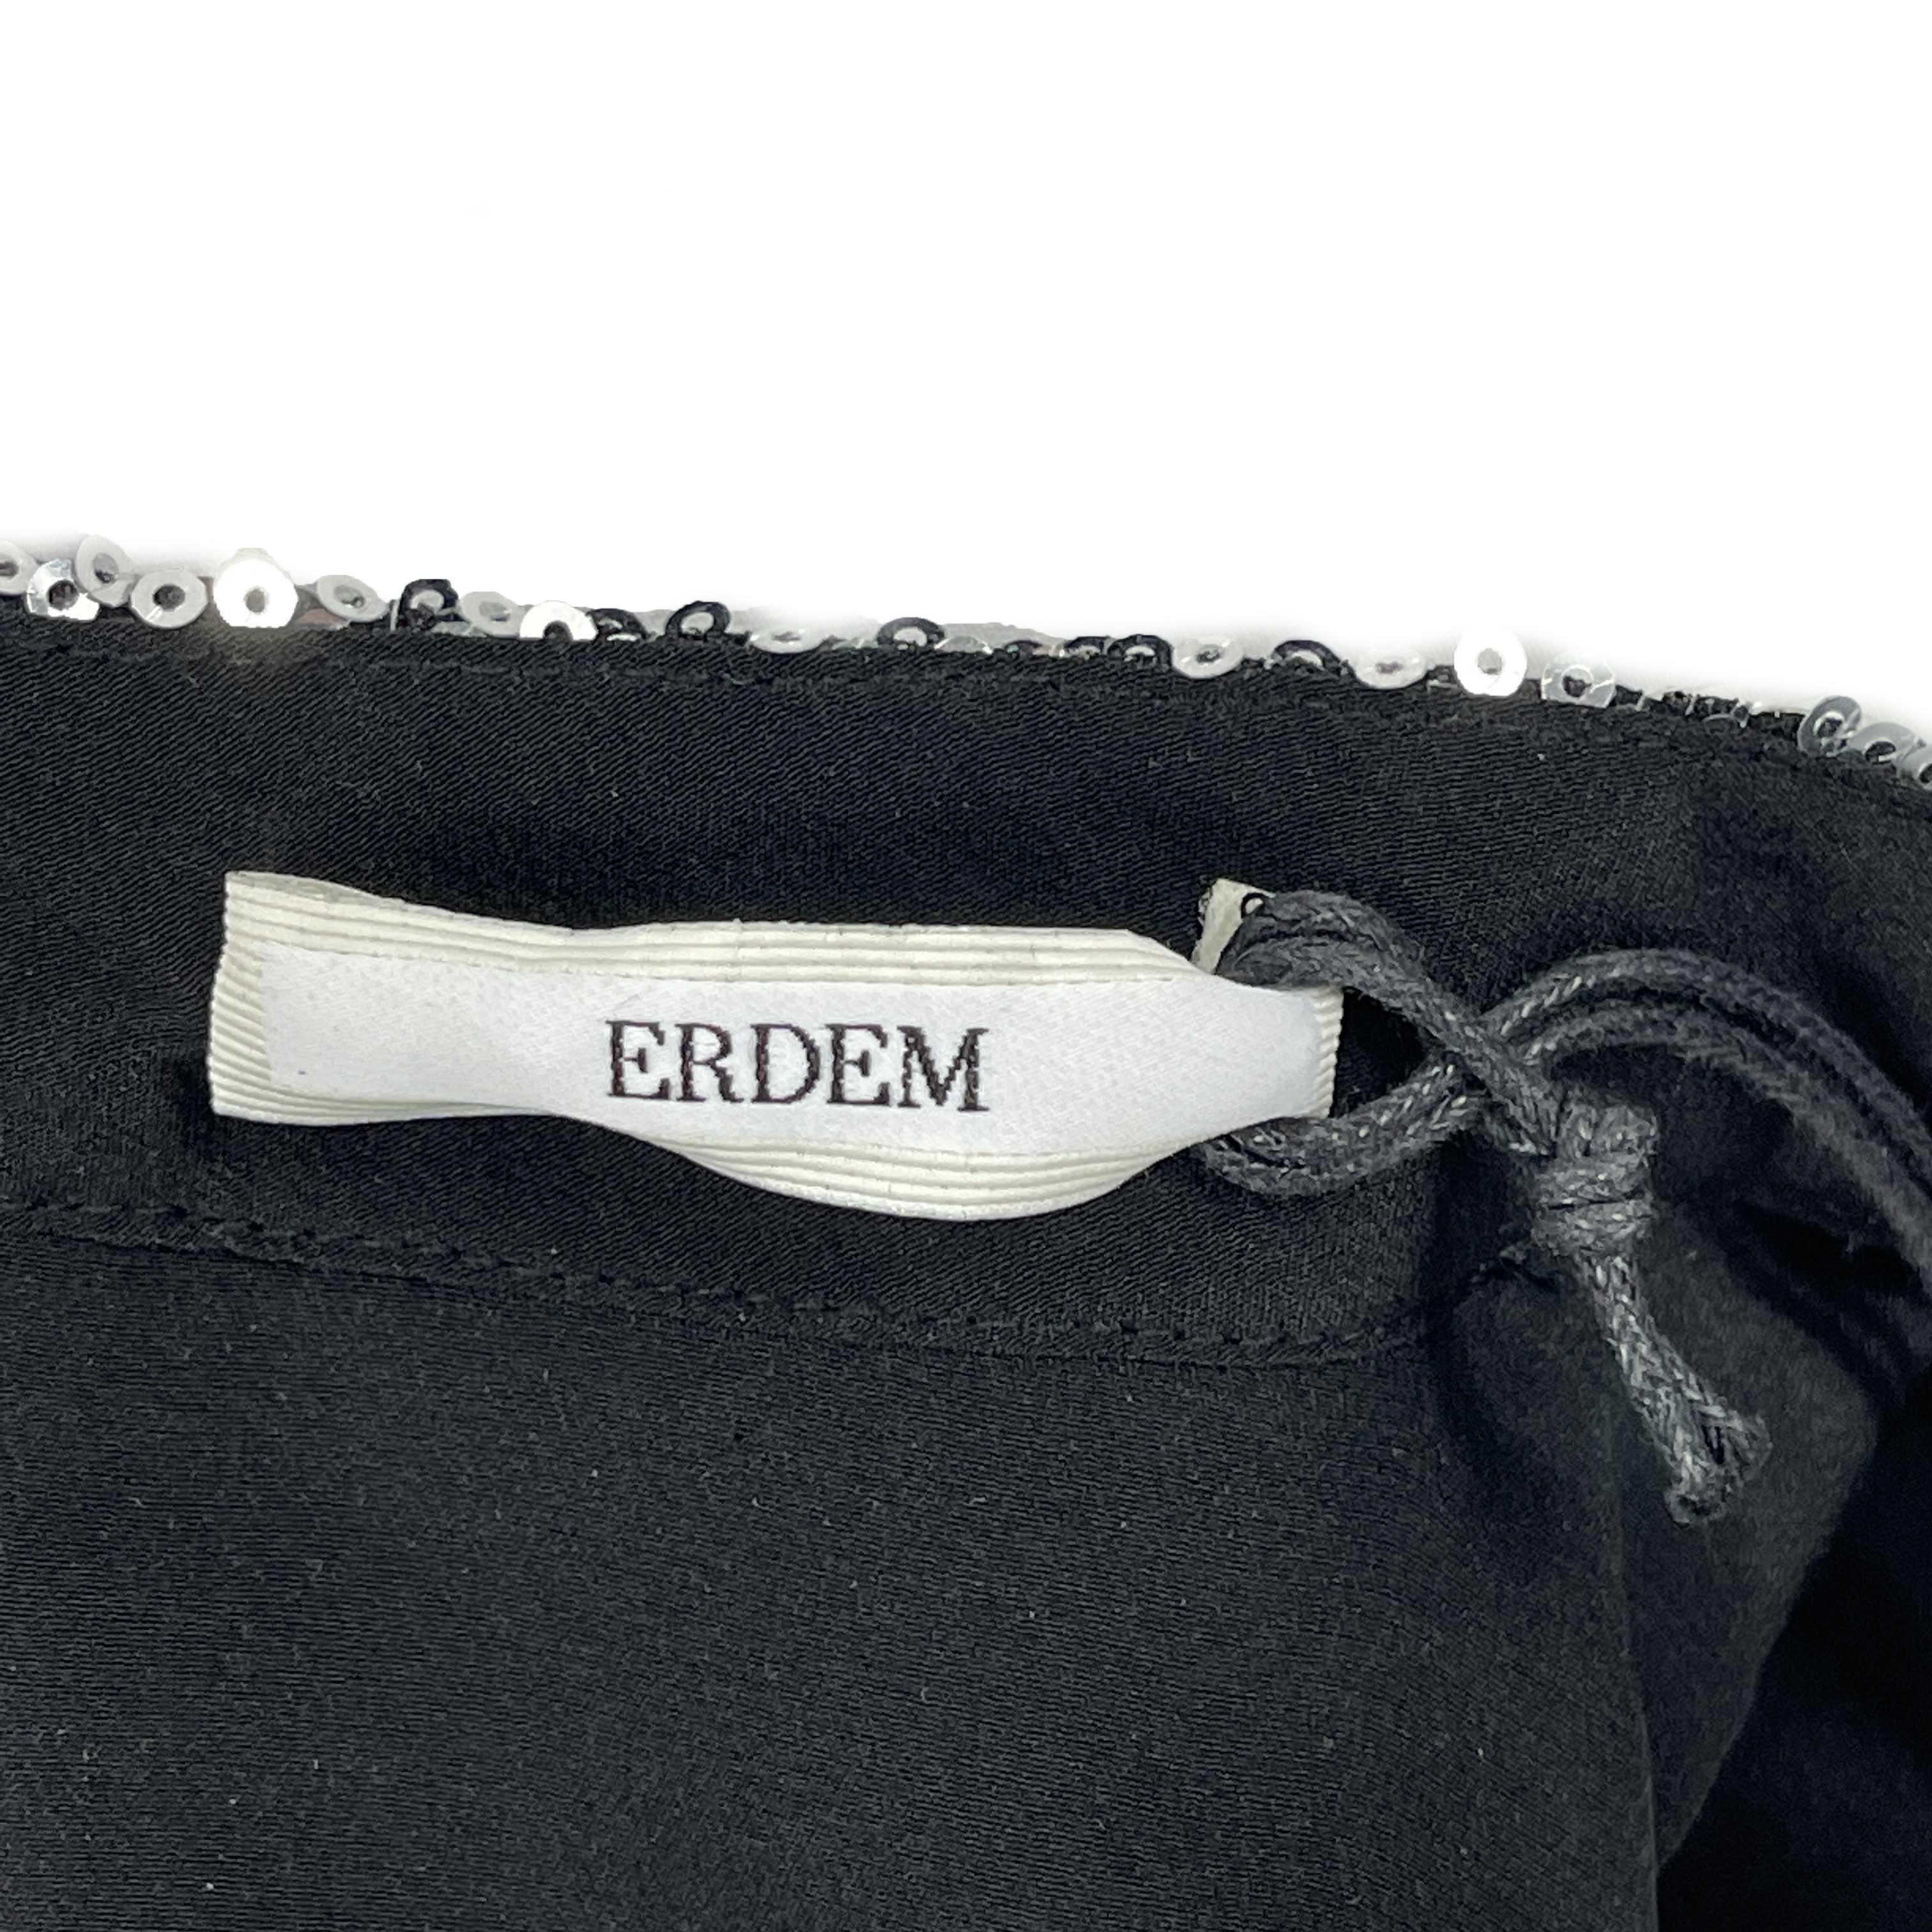 Women's Erdem - New w/ Tags - Tonya Sequin Embellished Long Sleeve - UK 6 US 2 - Top